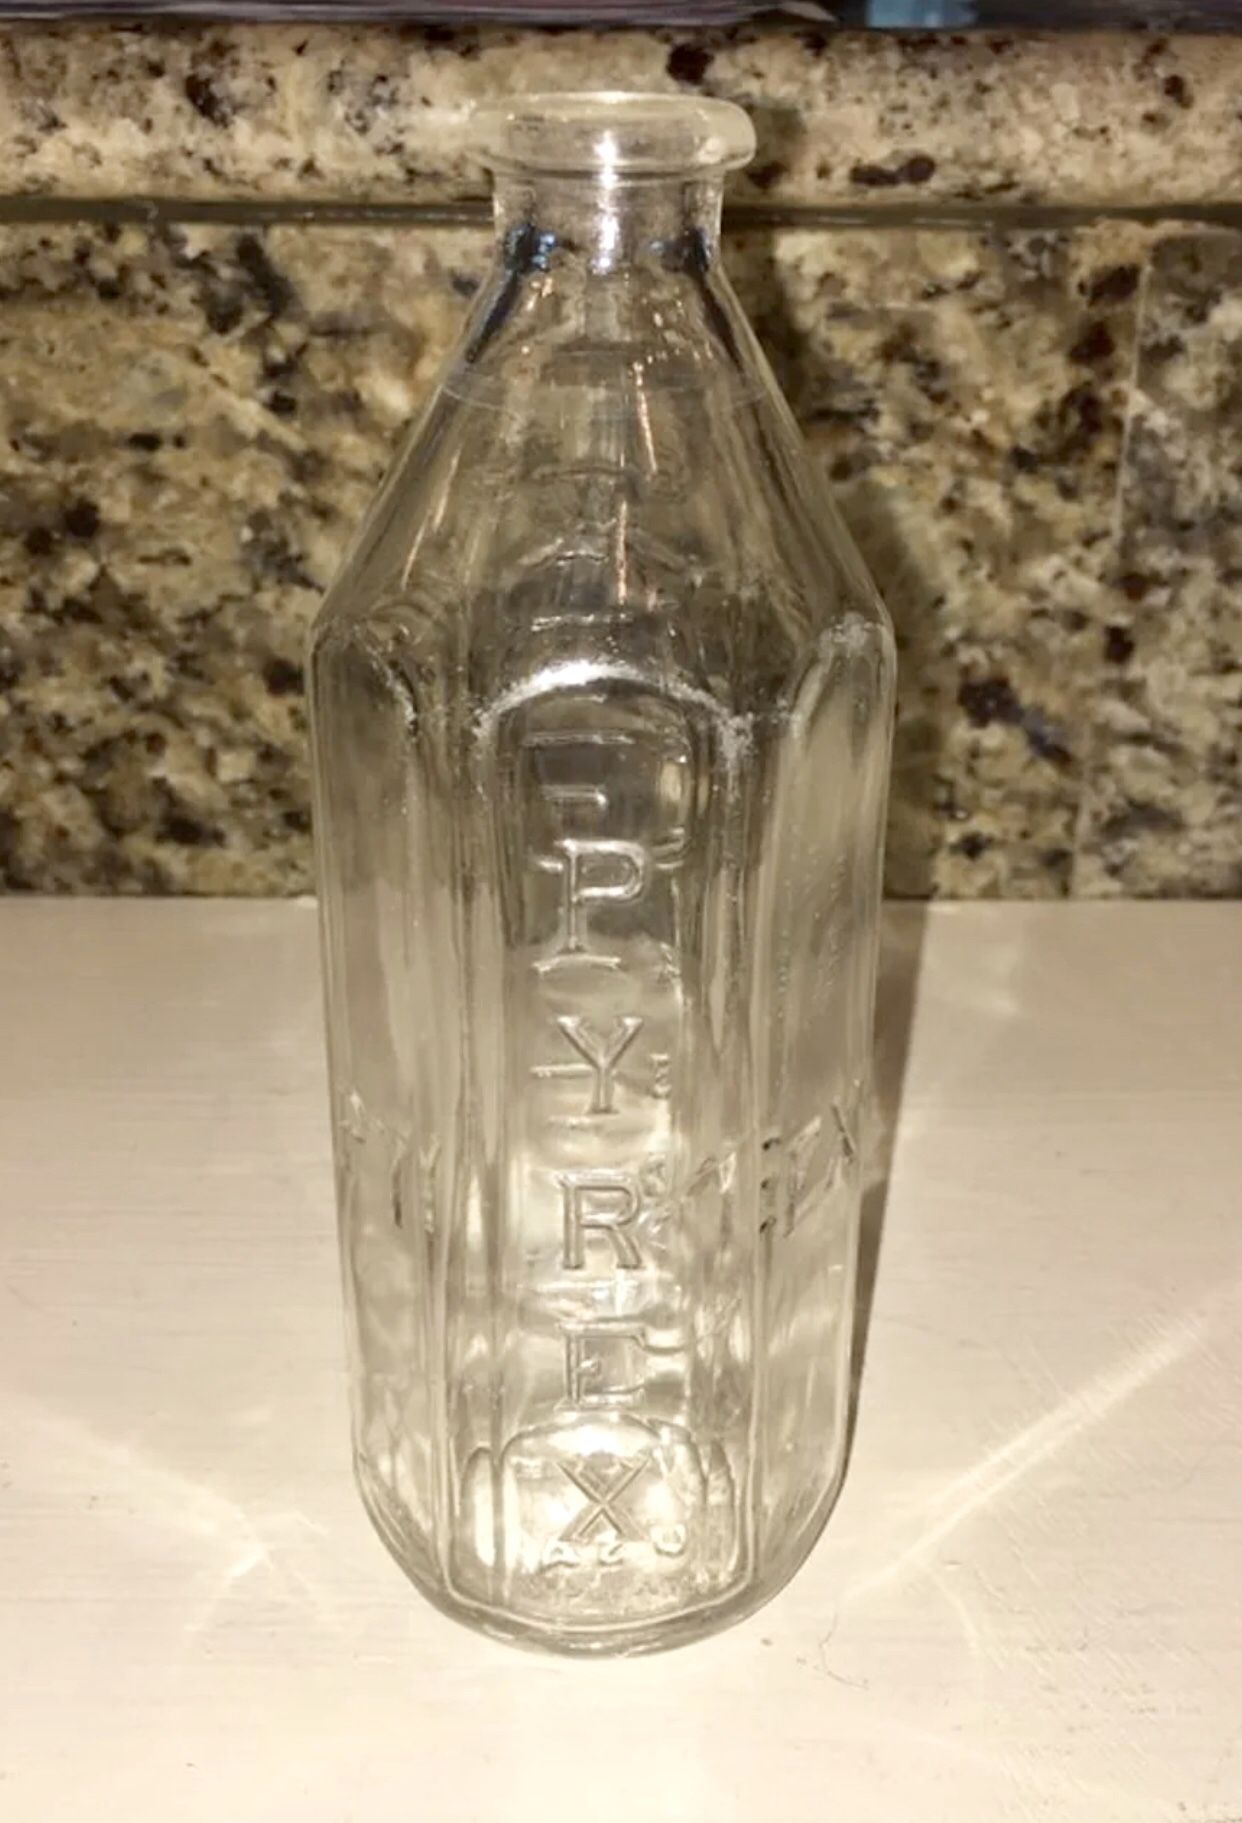 Vintage Pyrex glass baby bottle